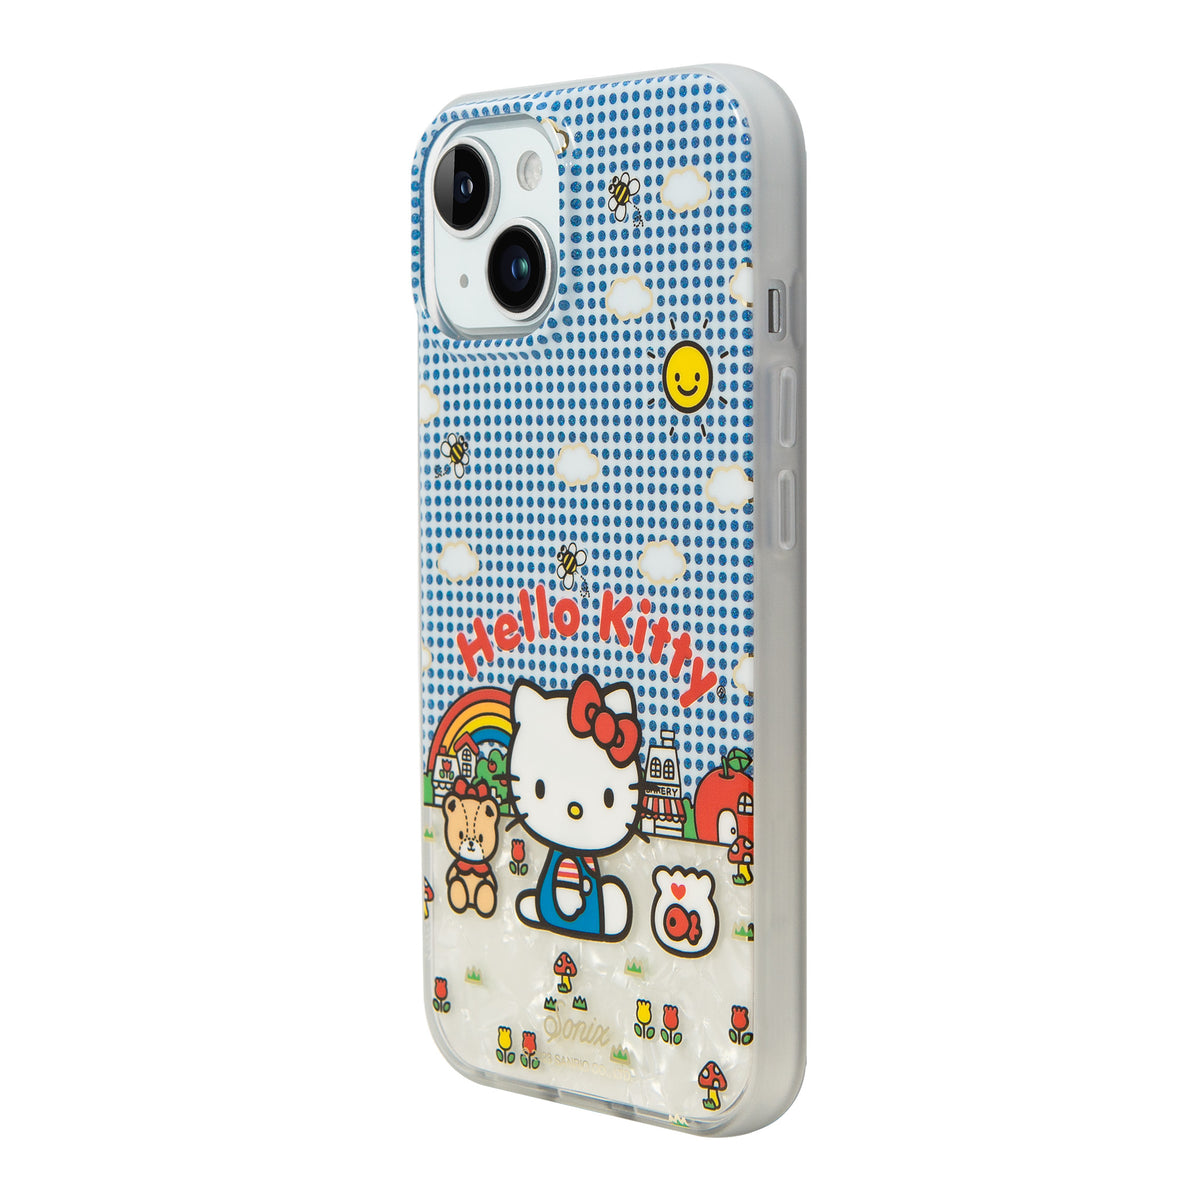 Hello Kitty x Sonix Good Morning iPhone Case Accessory BySonix Inc.   